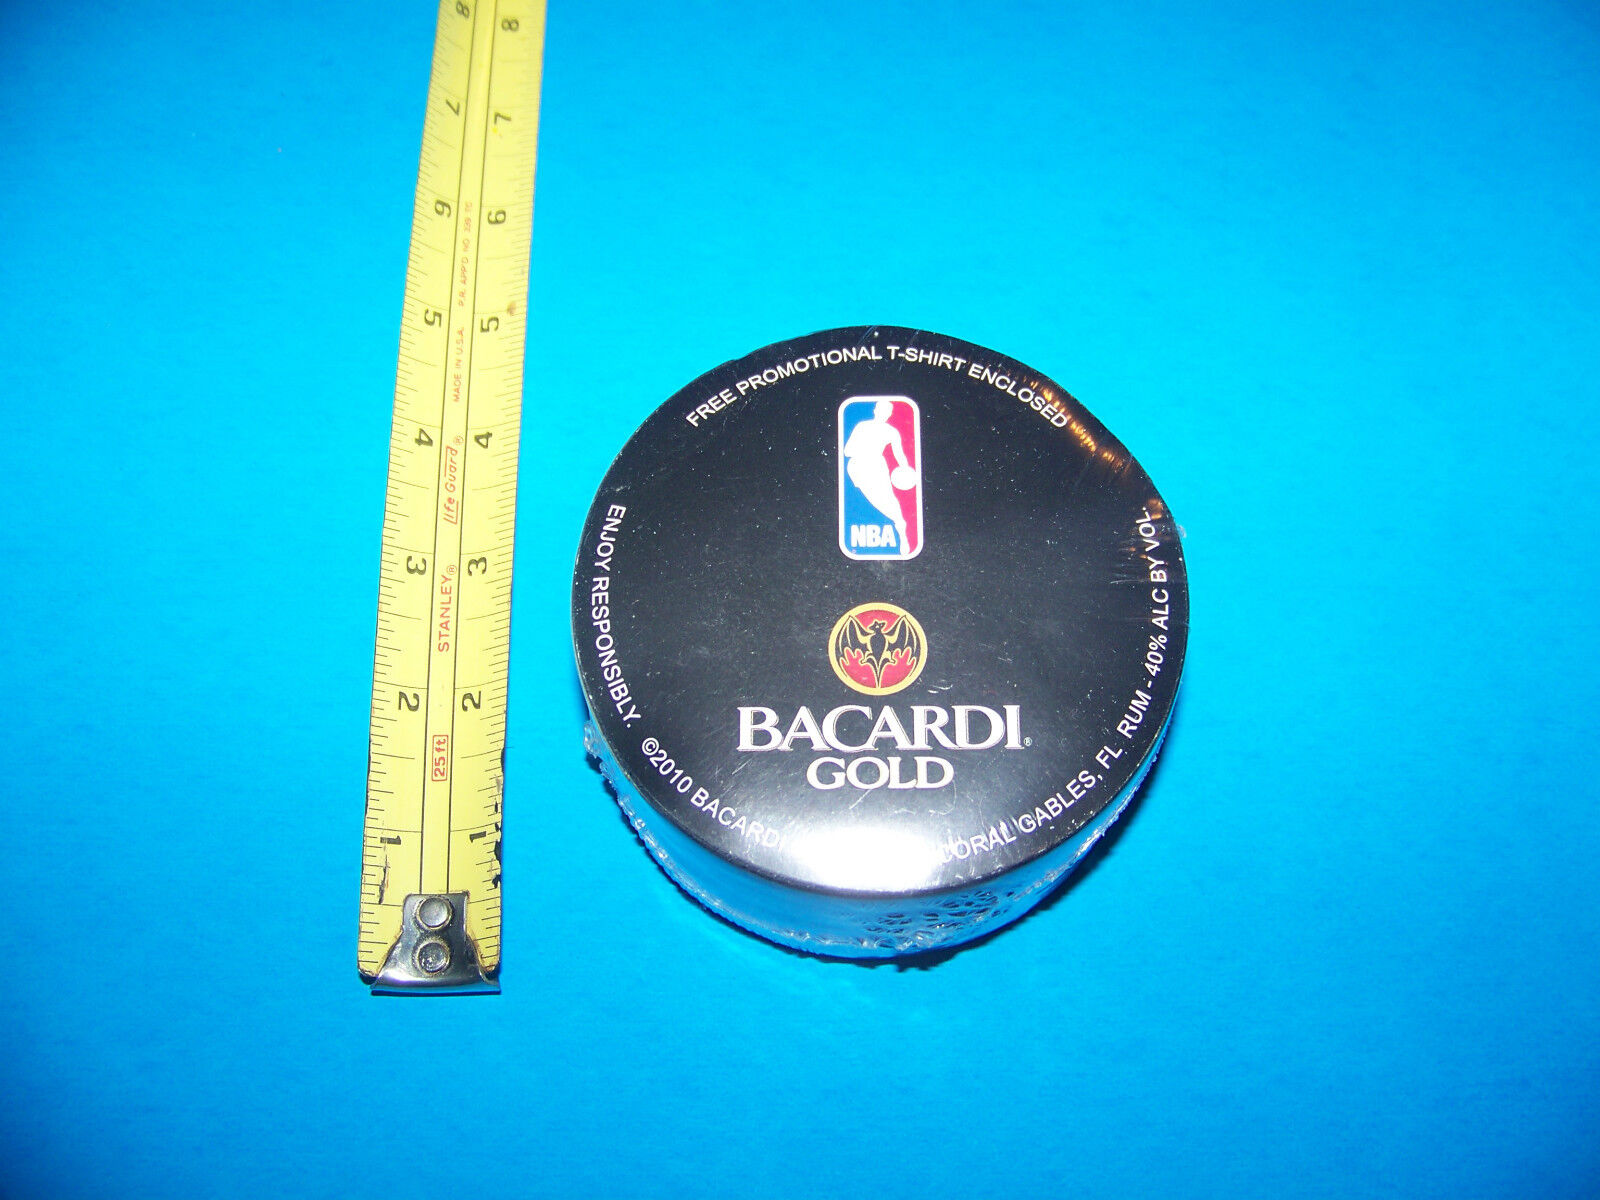 Bacardi Gold NBA Promotional T-Shirt  2010  ( Never Opened) 